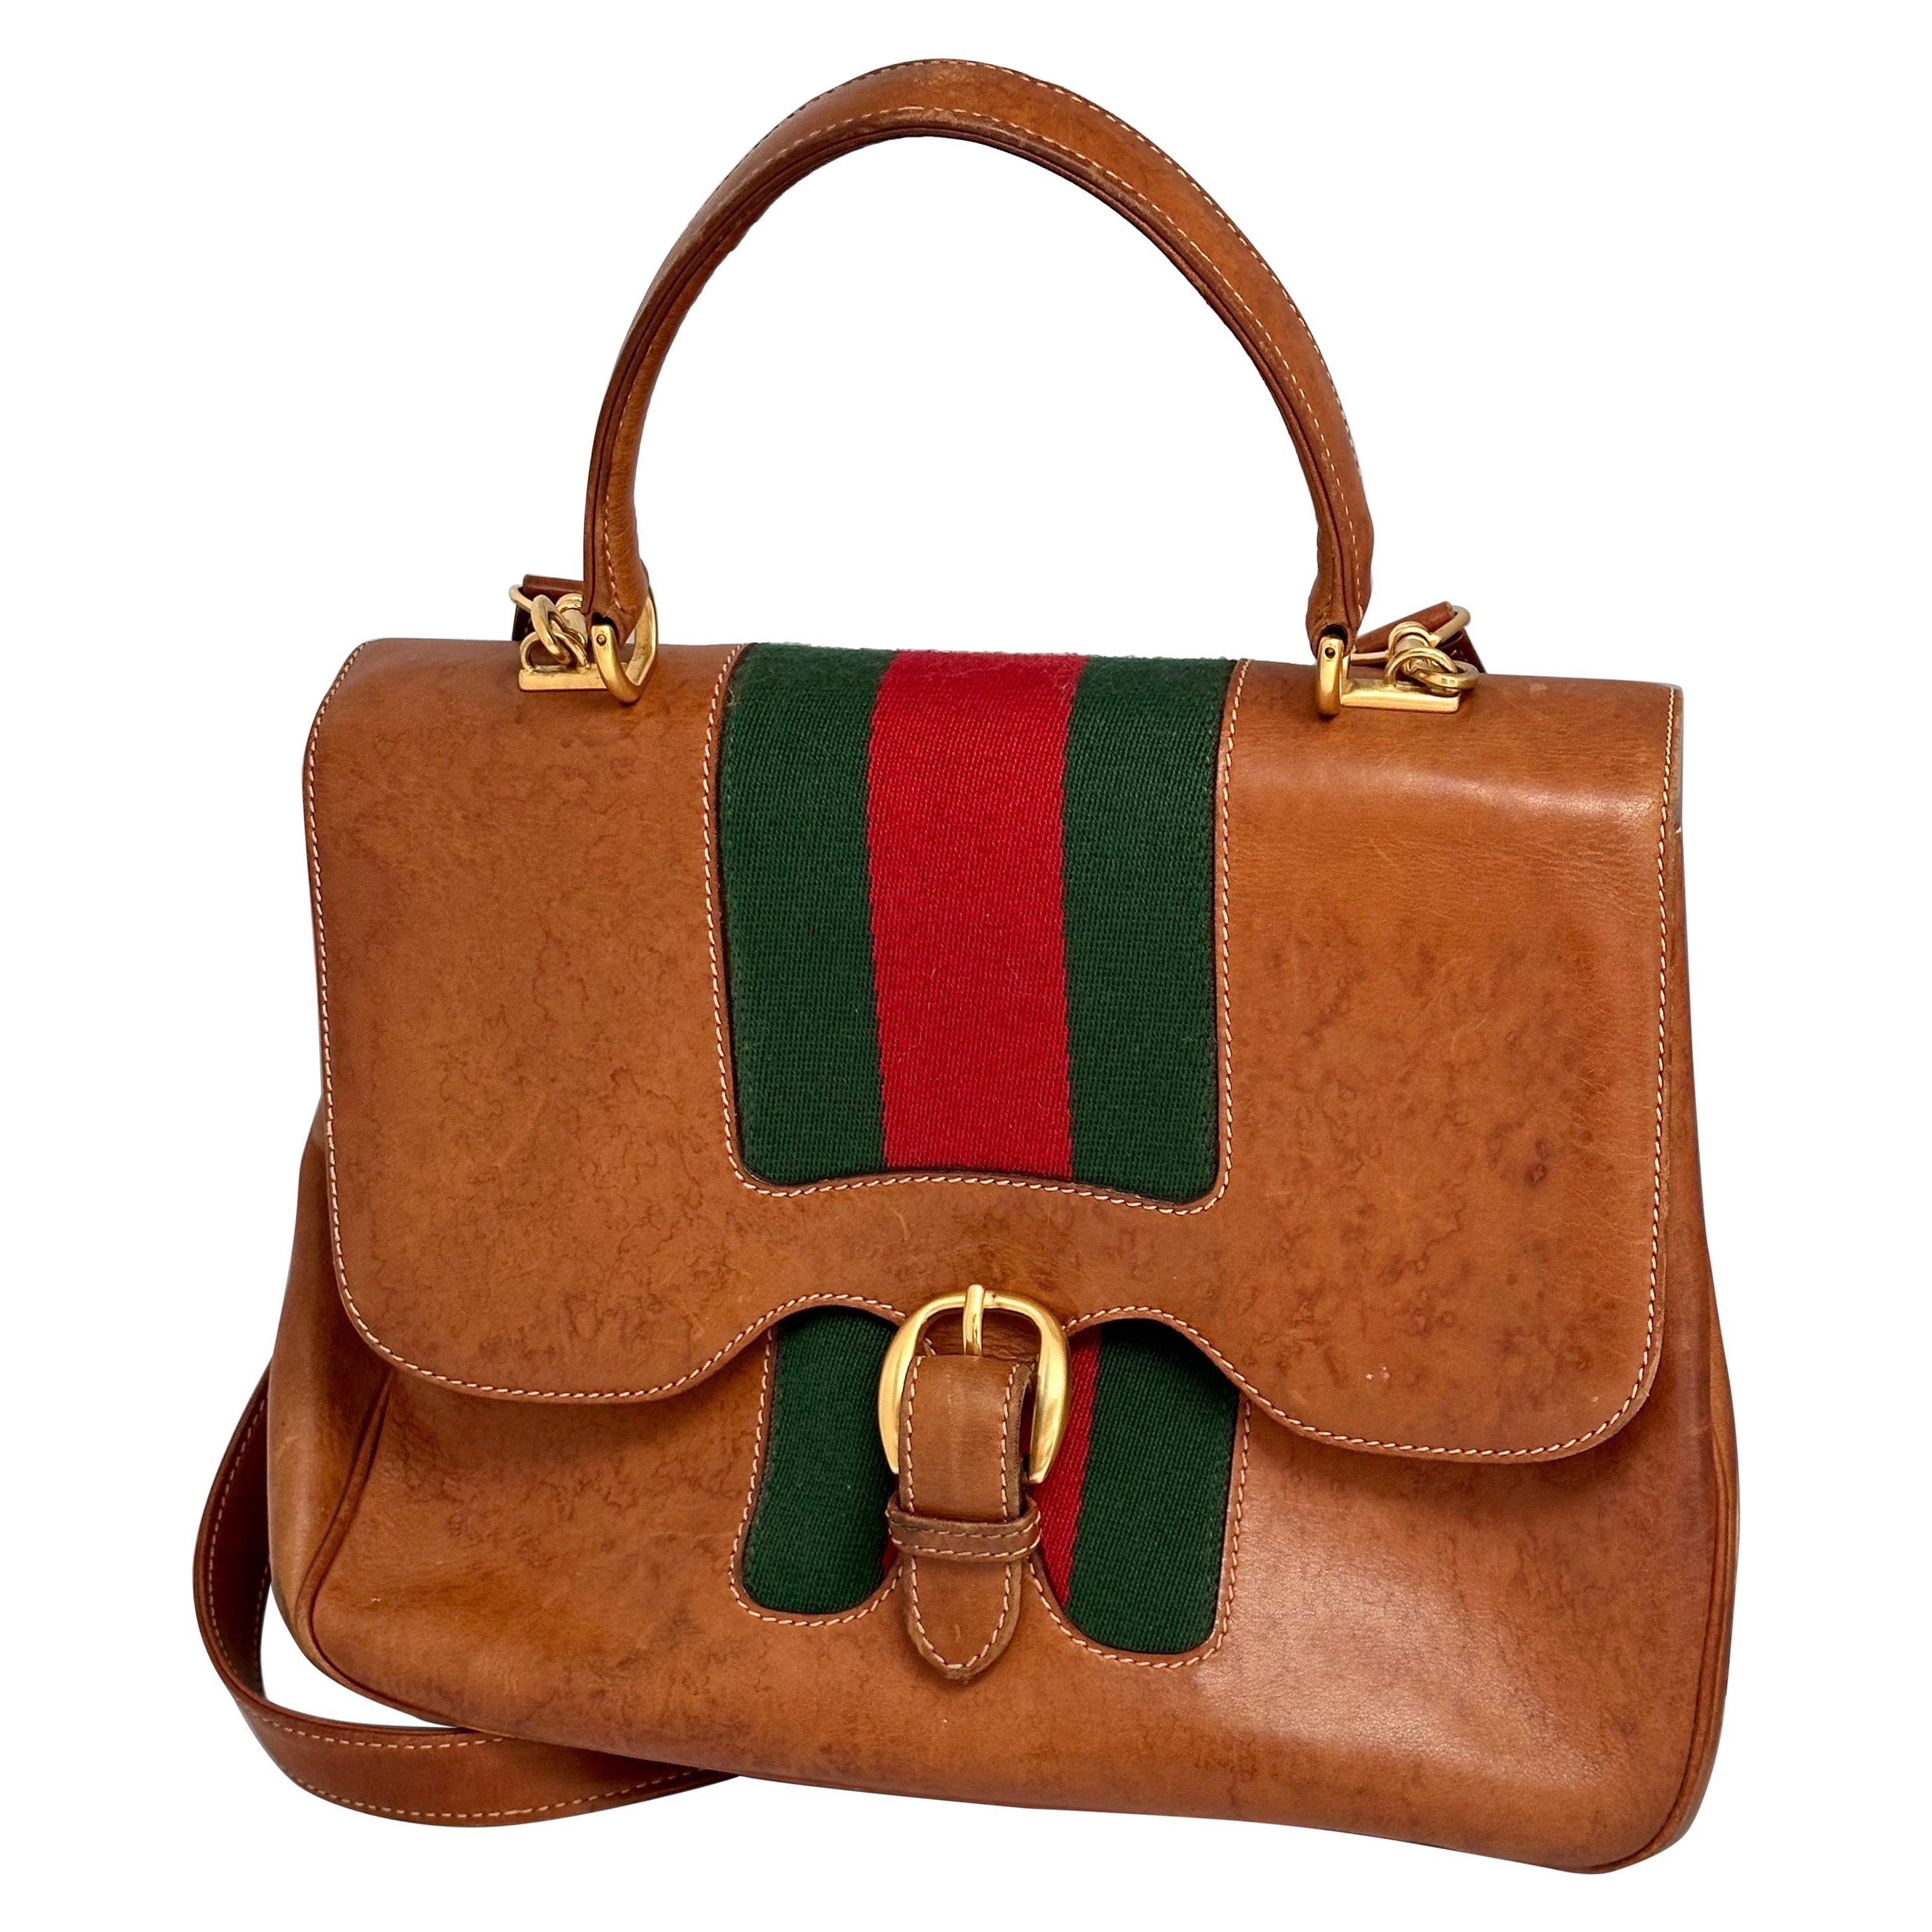 Vintage Gucci tan leather/ Brass / Fabric handbag estimated mid 1970’s